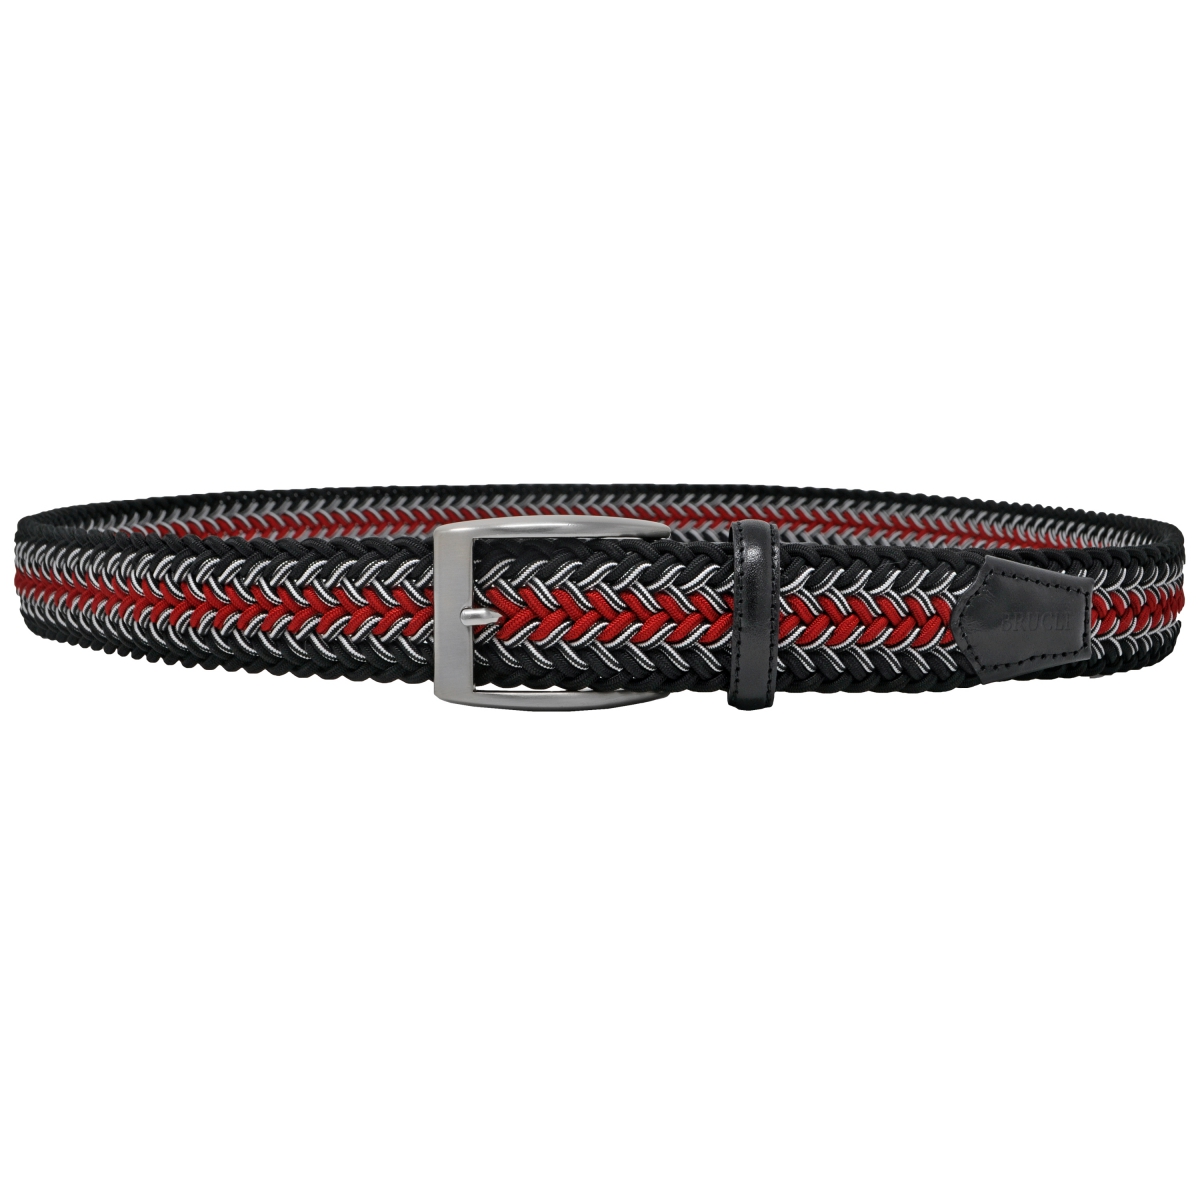 Cintura elastica intrecciata nera e rossa